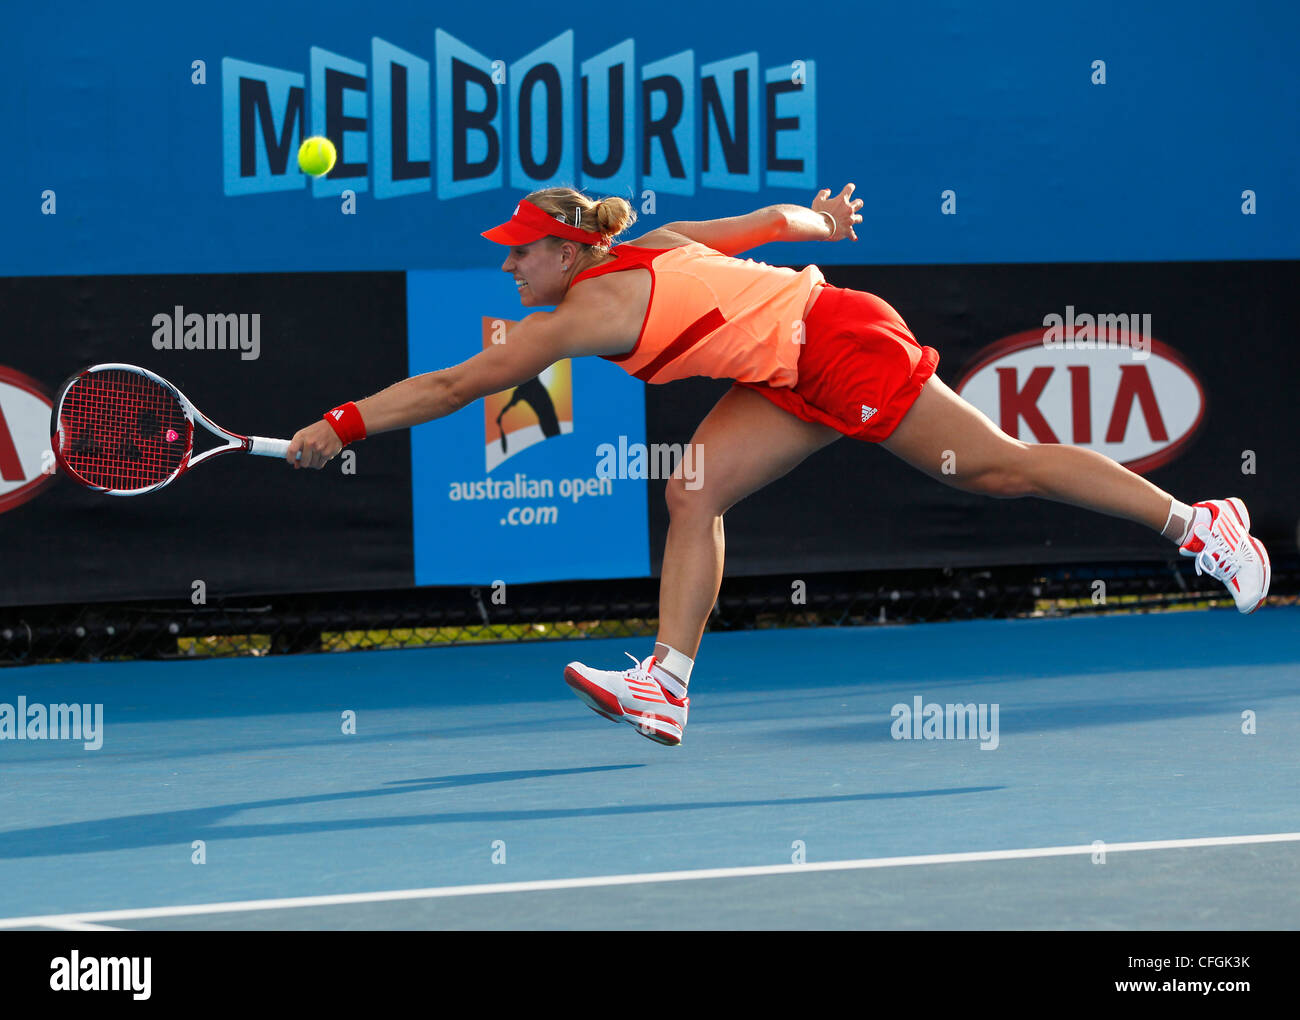 Ret sagtmodighed Bløde fødder Angelique Kerber (GER) in action at the Australian Open 2012, ITF Grand  Slam Tennis Tournament, Melbourne Park,Australia Stock Photo - Alamy